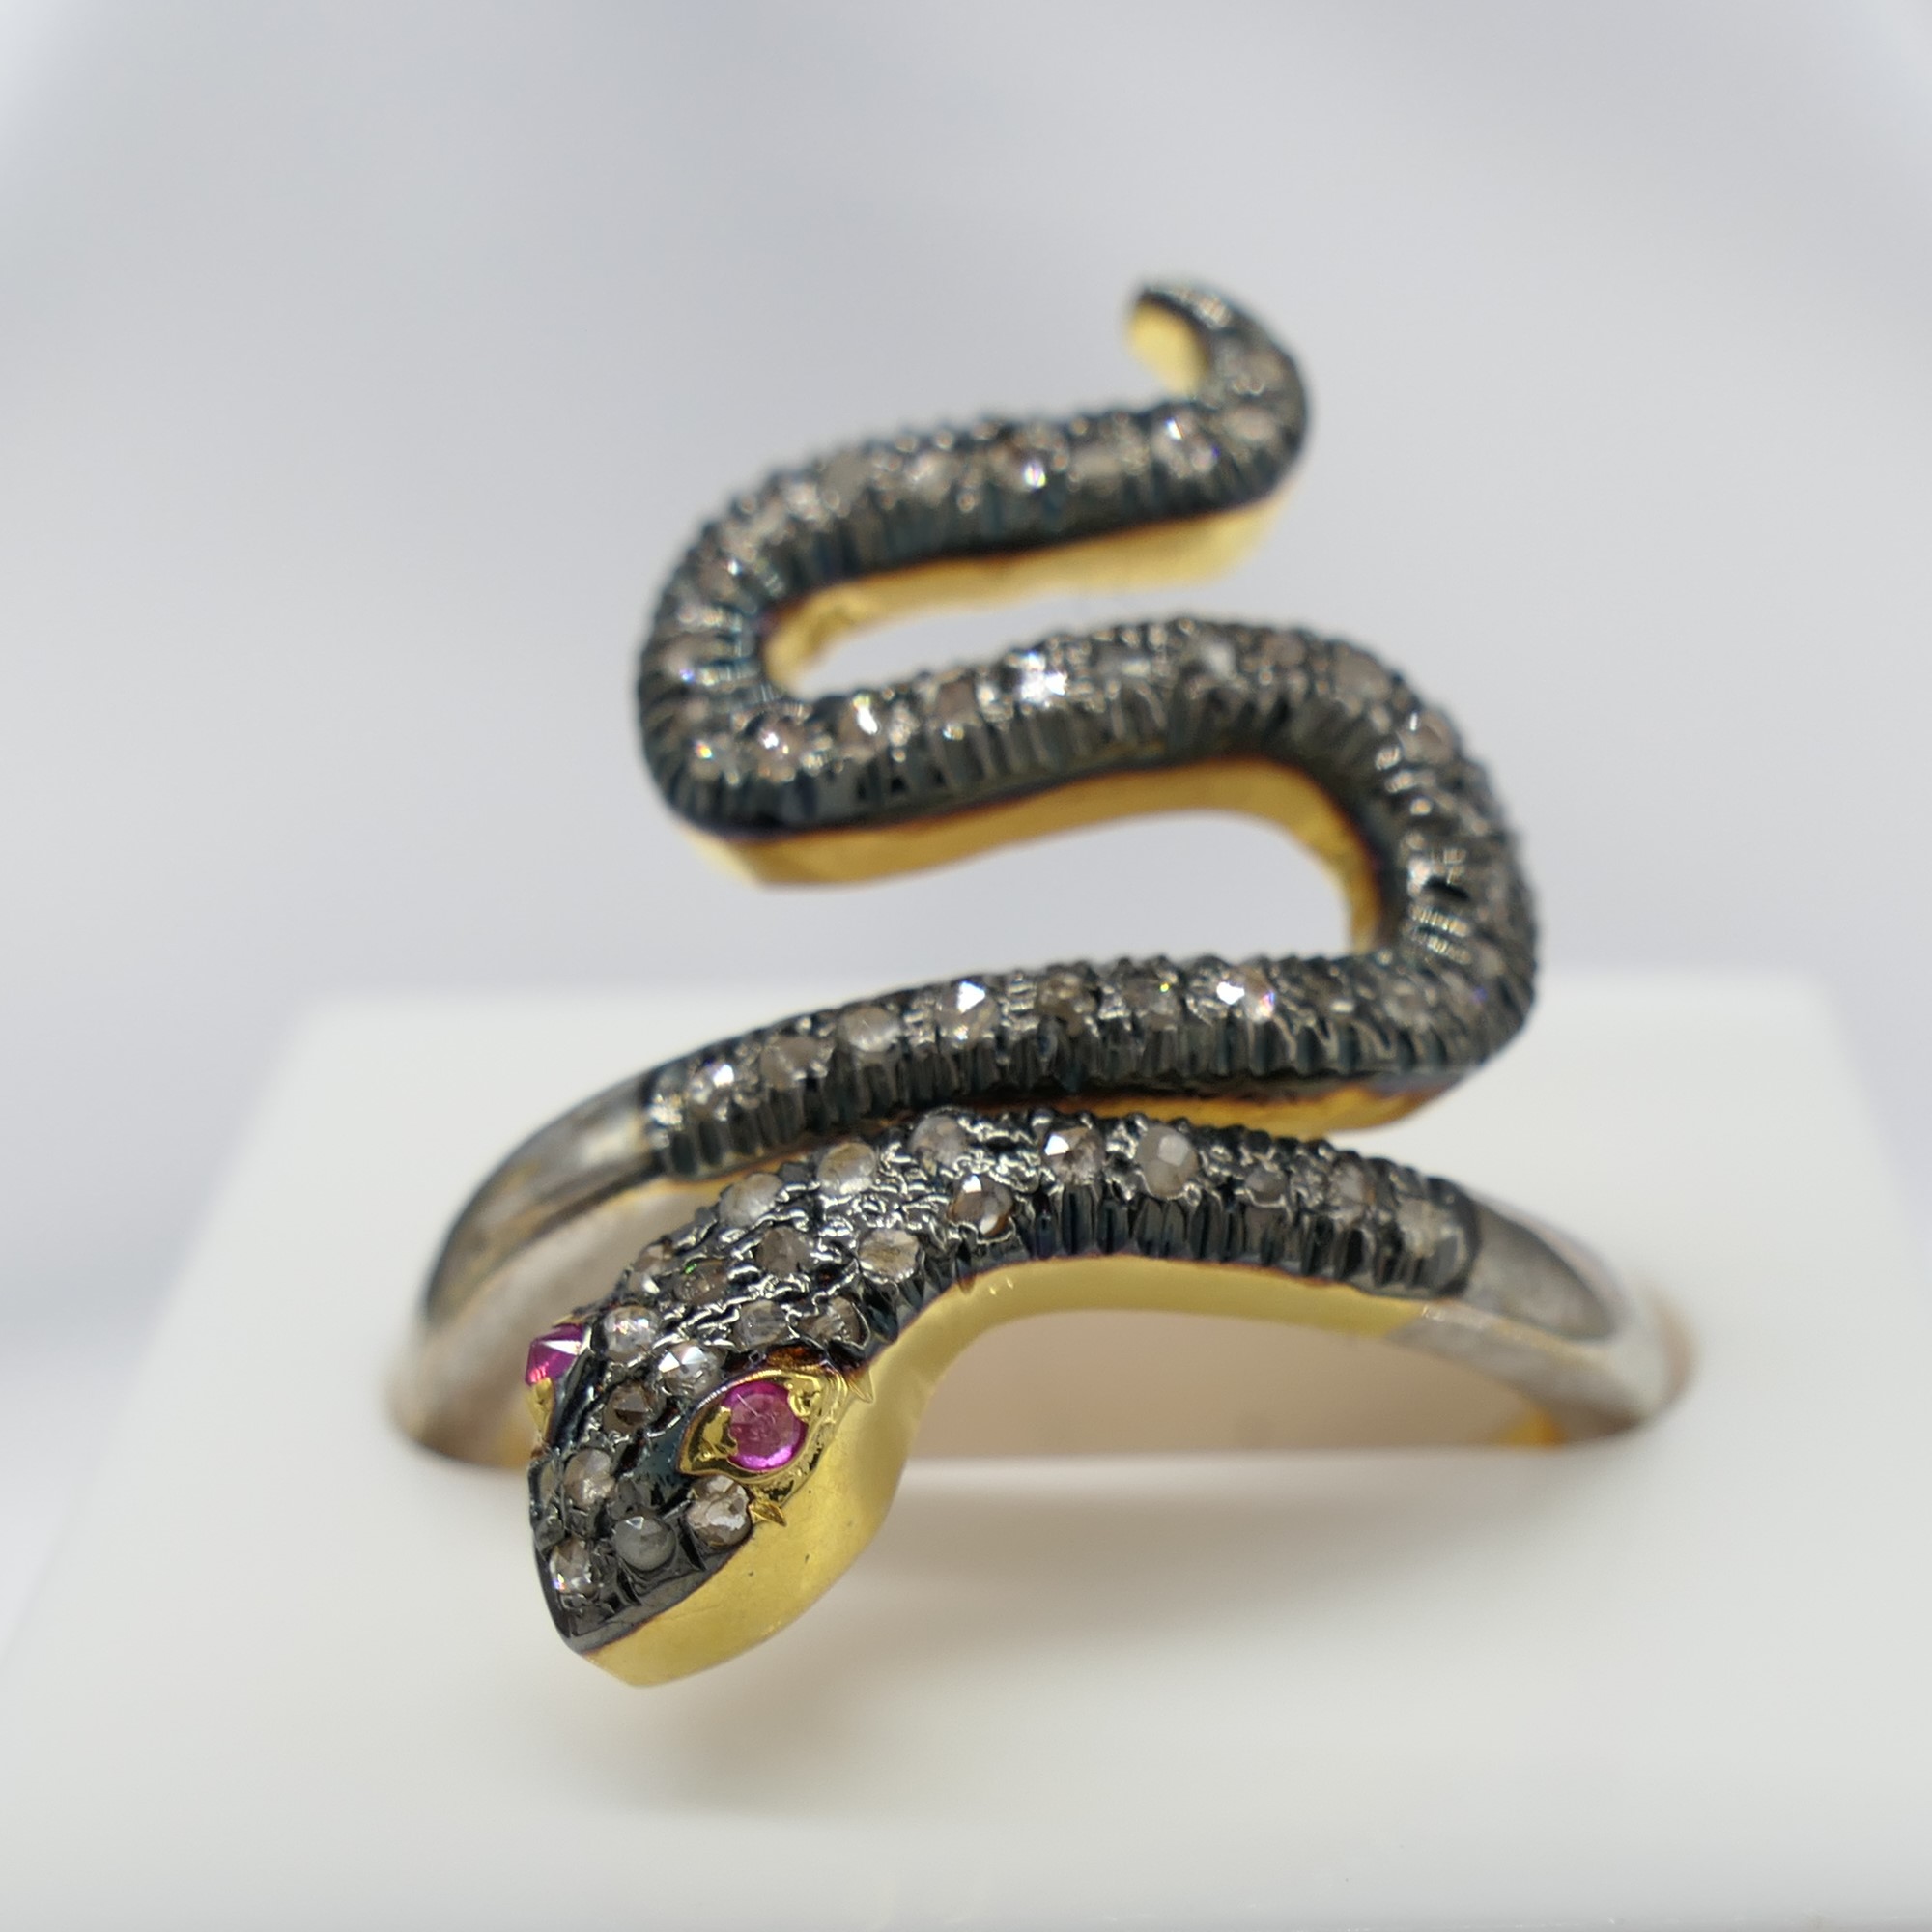 Unusual handmade diamond and ruby snake ring - Image 6 of 6